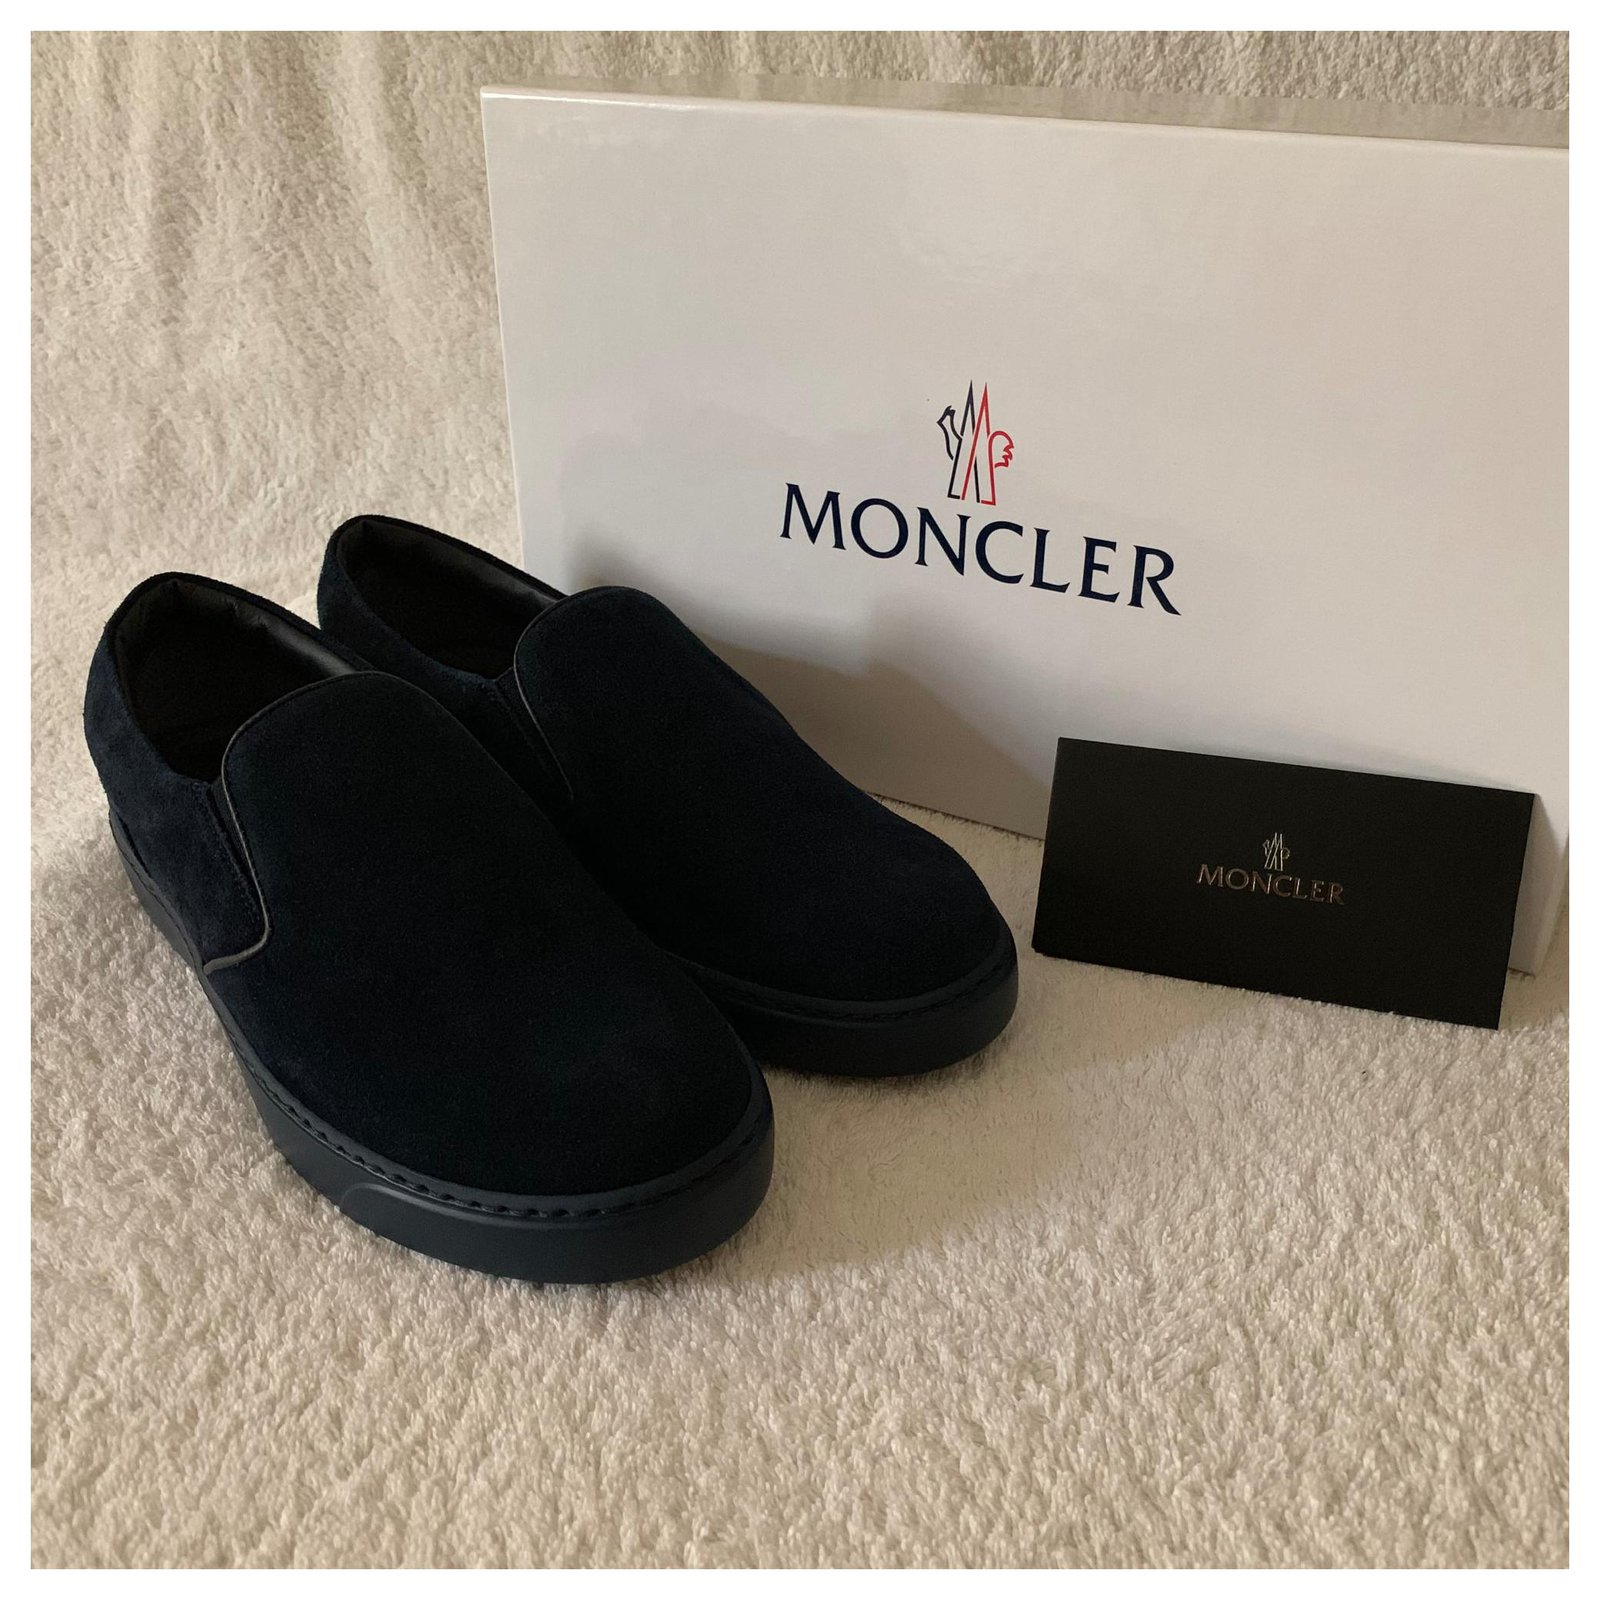 moncler slip on sneakers